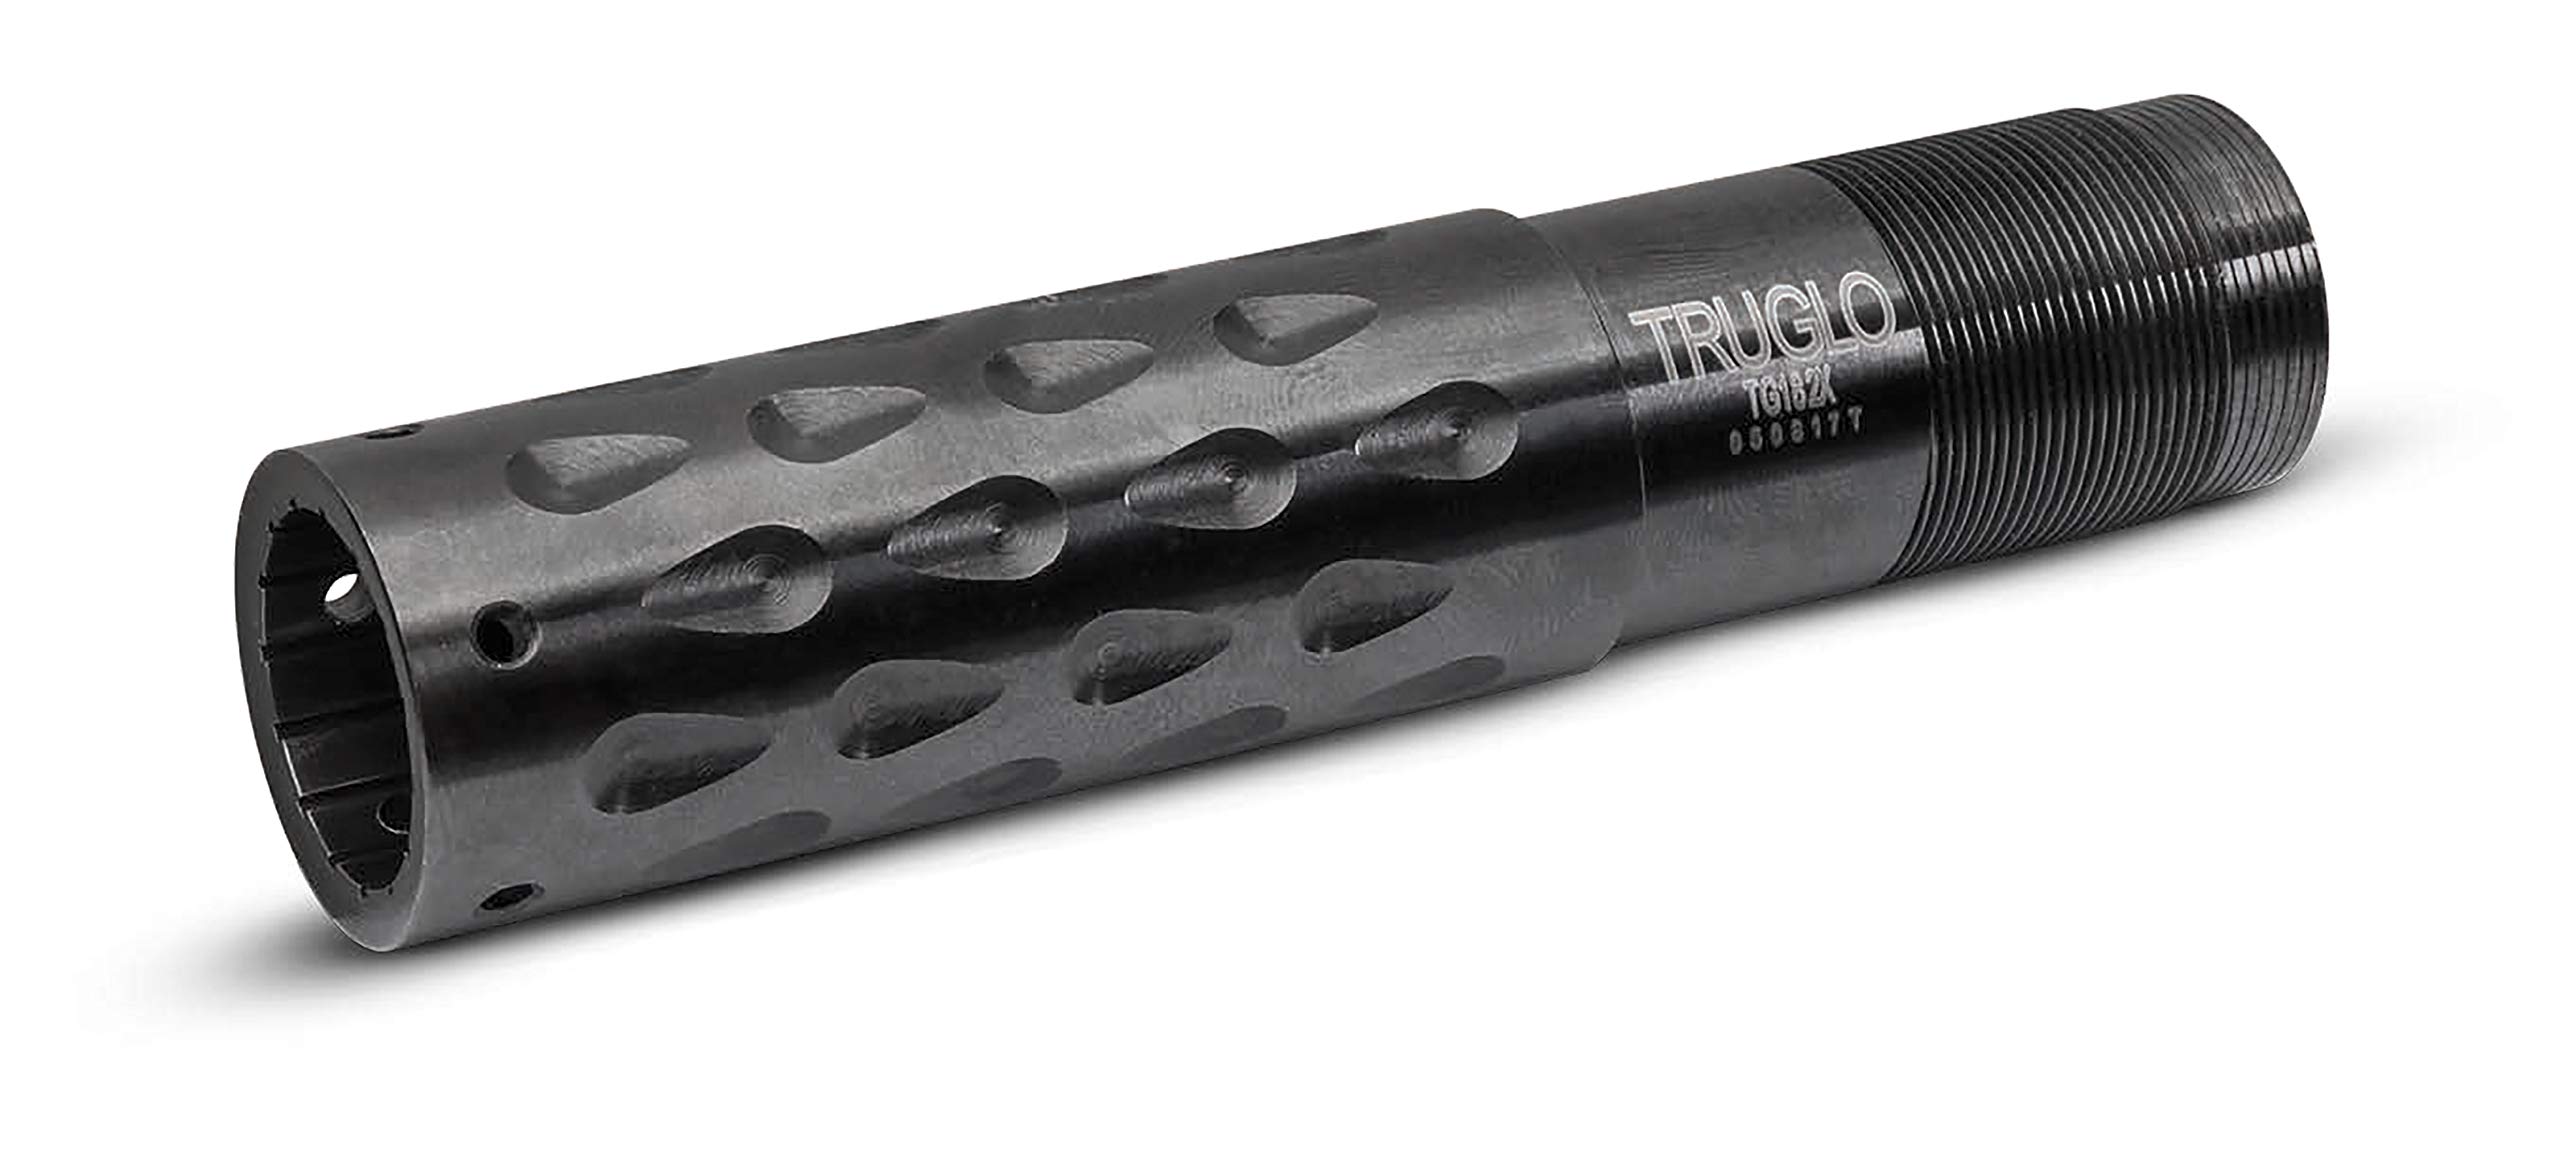 Truglo TG182X Head Banger Choke Tube, 12 Gauge, Long-Range, Turkey, Black